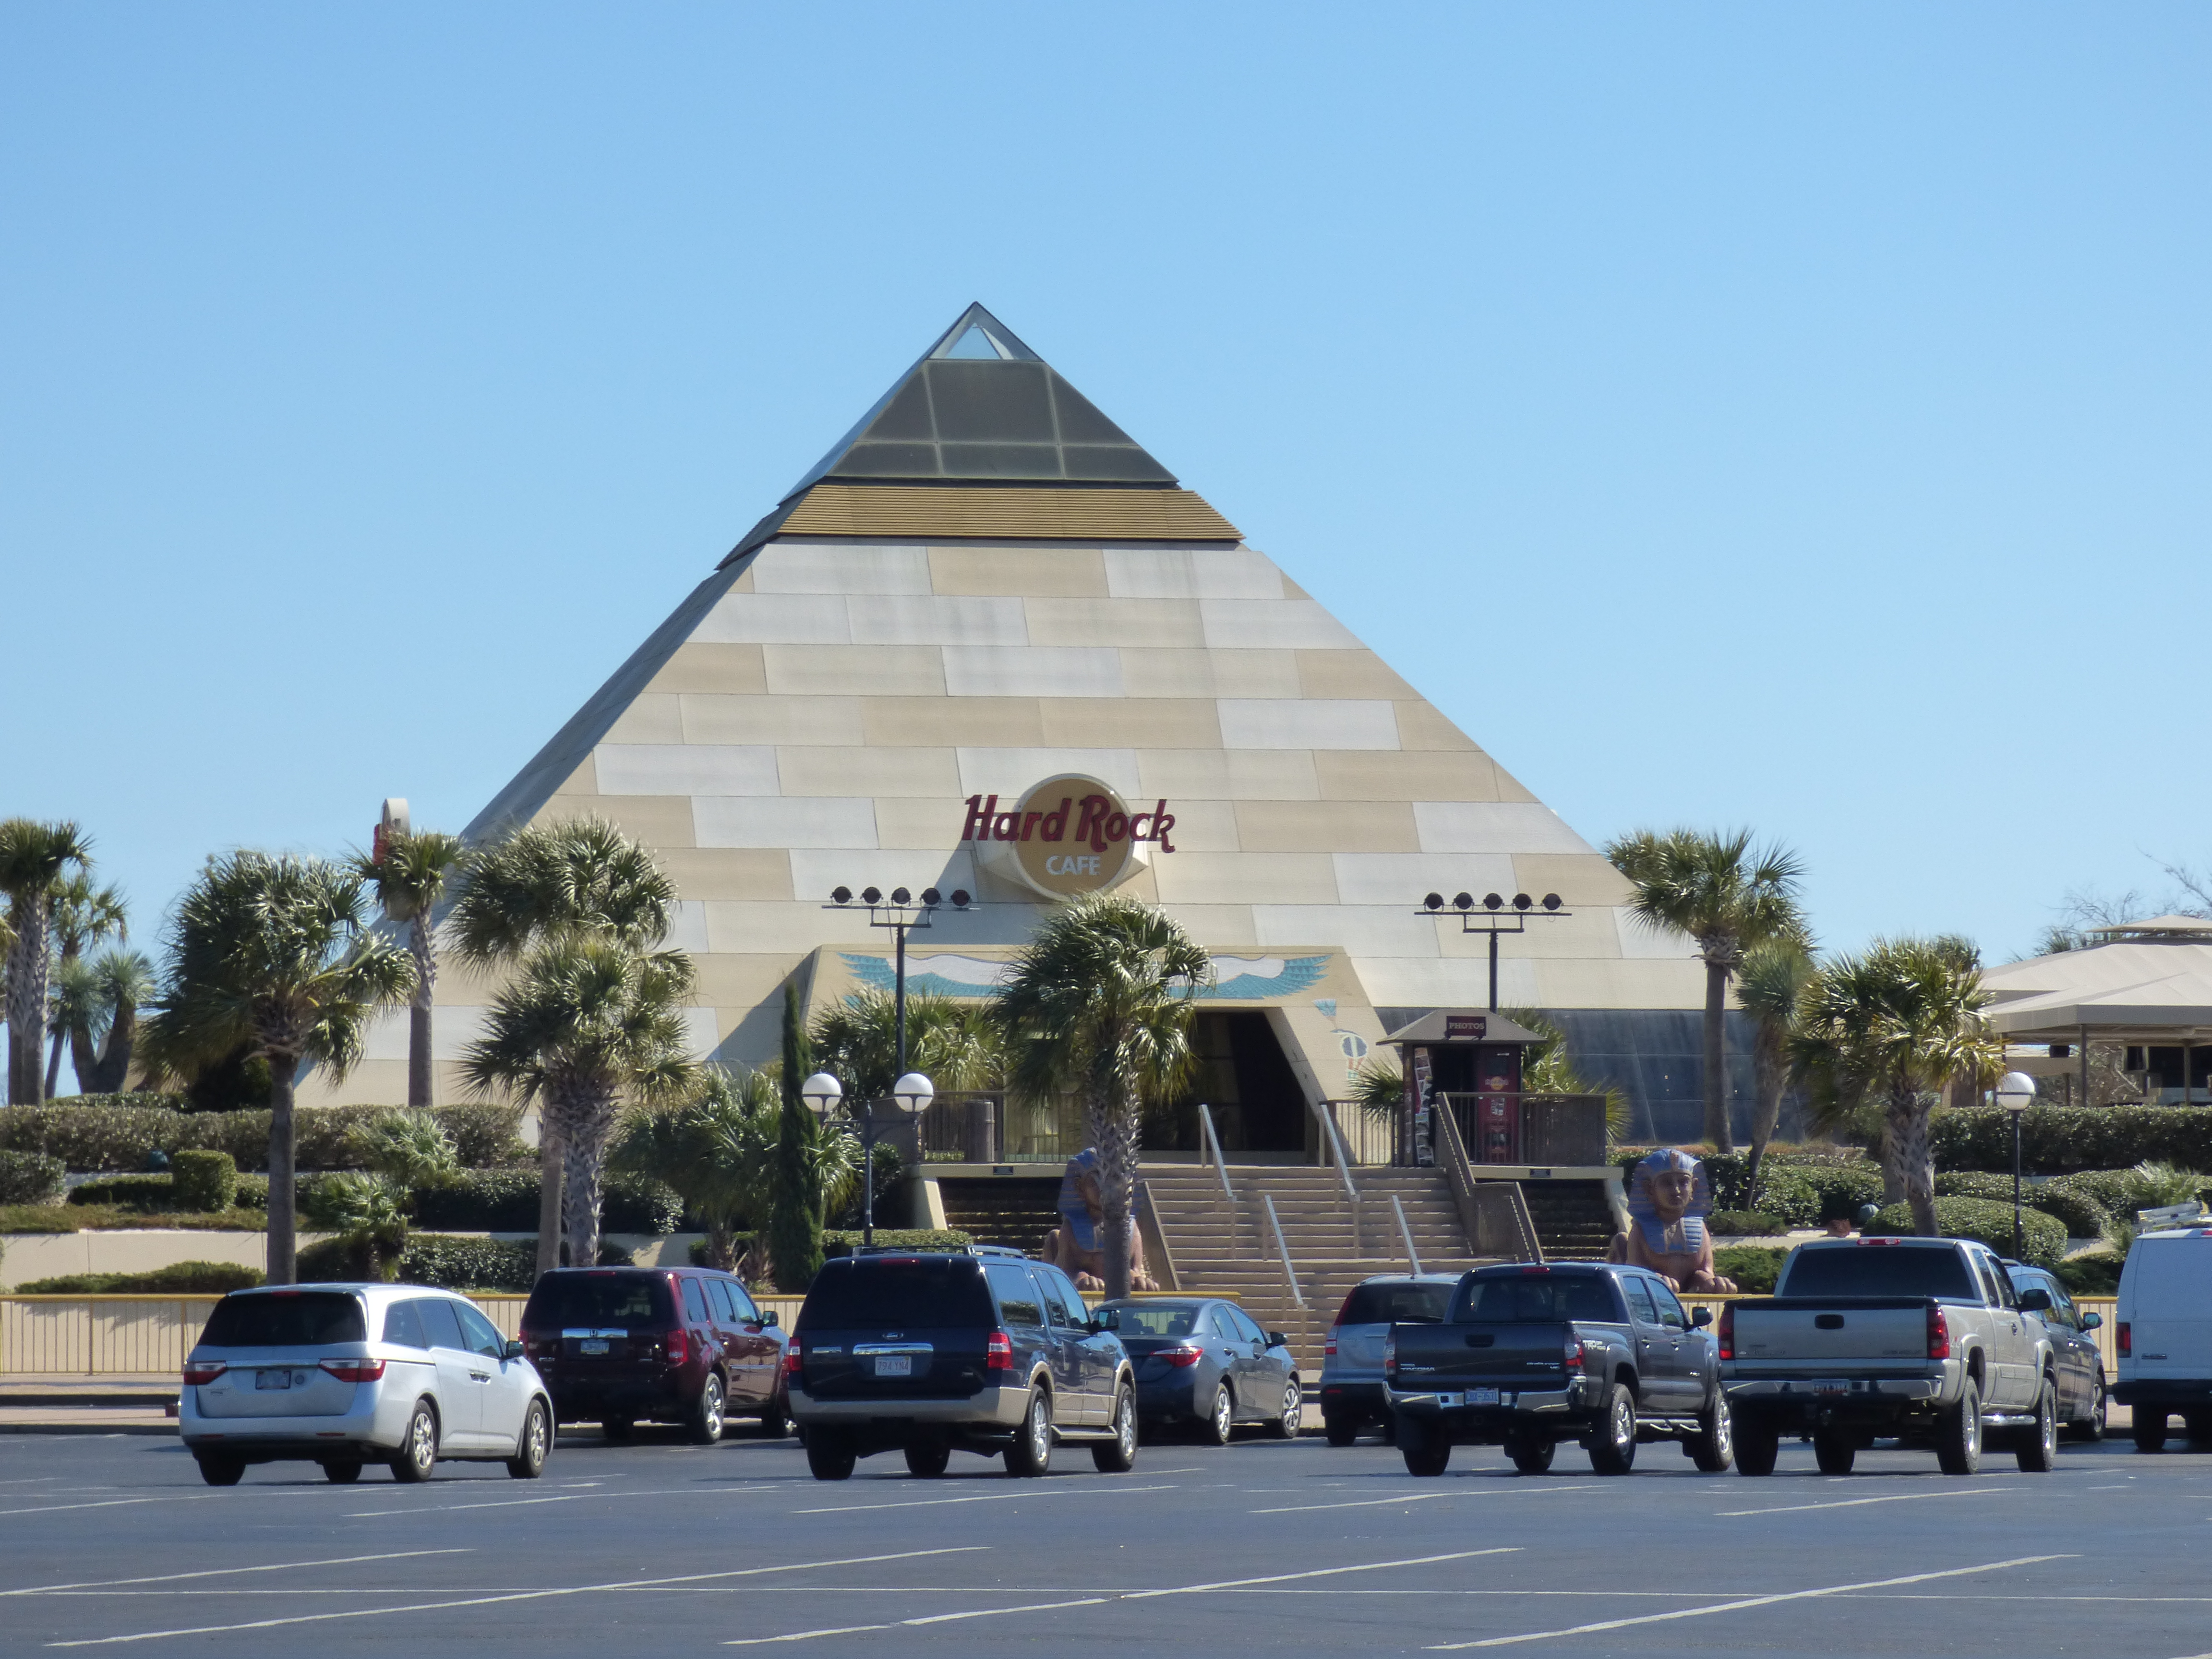 File:Hard Rock Cafe pyramid in Myrtle Beach.JPG - Wikimedia Commons